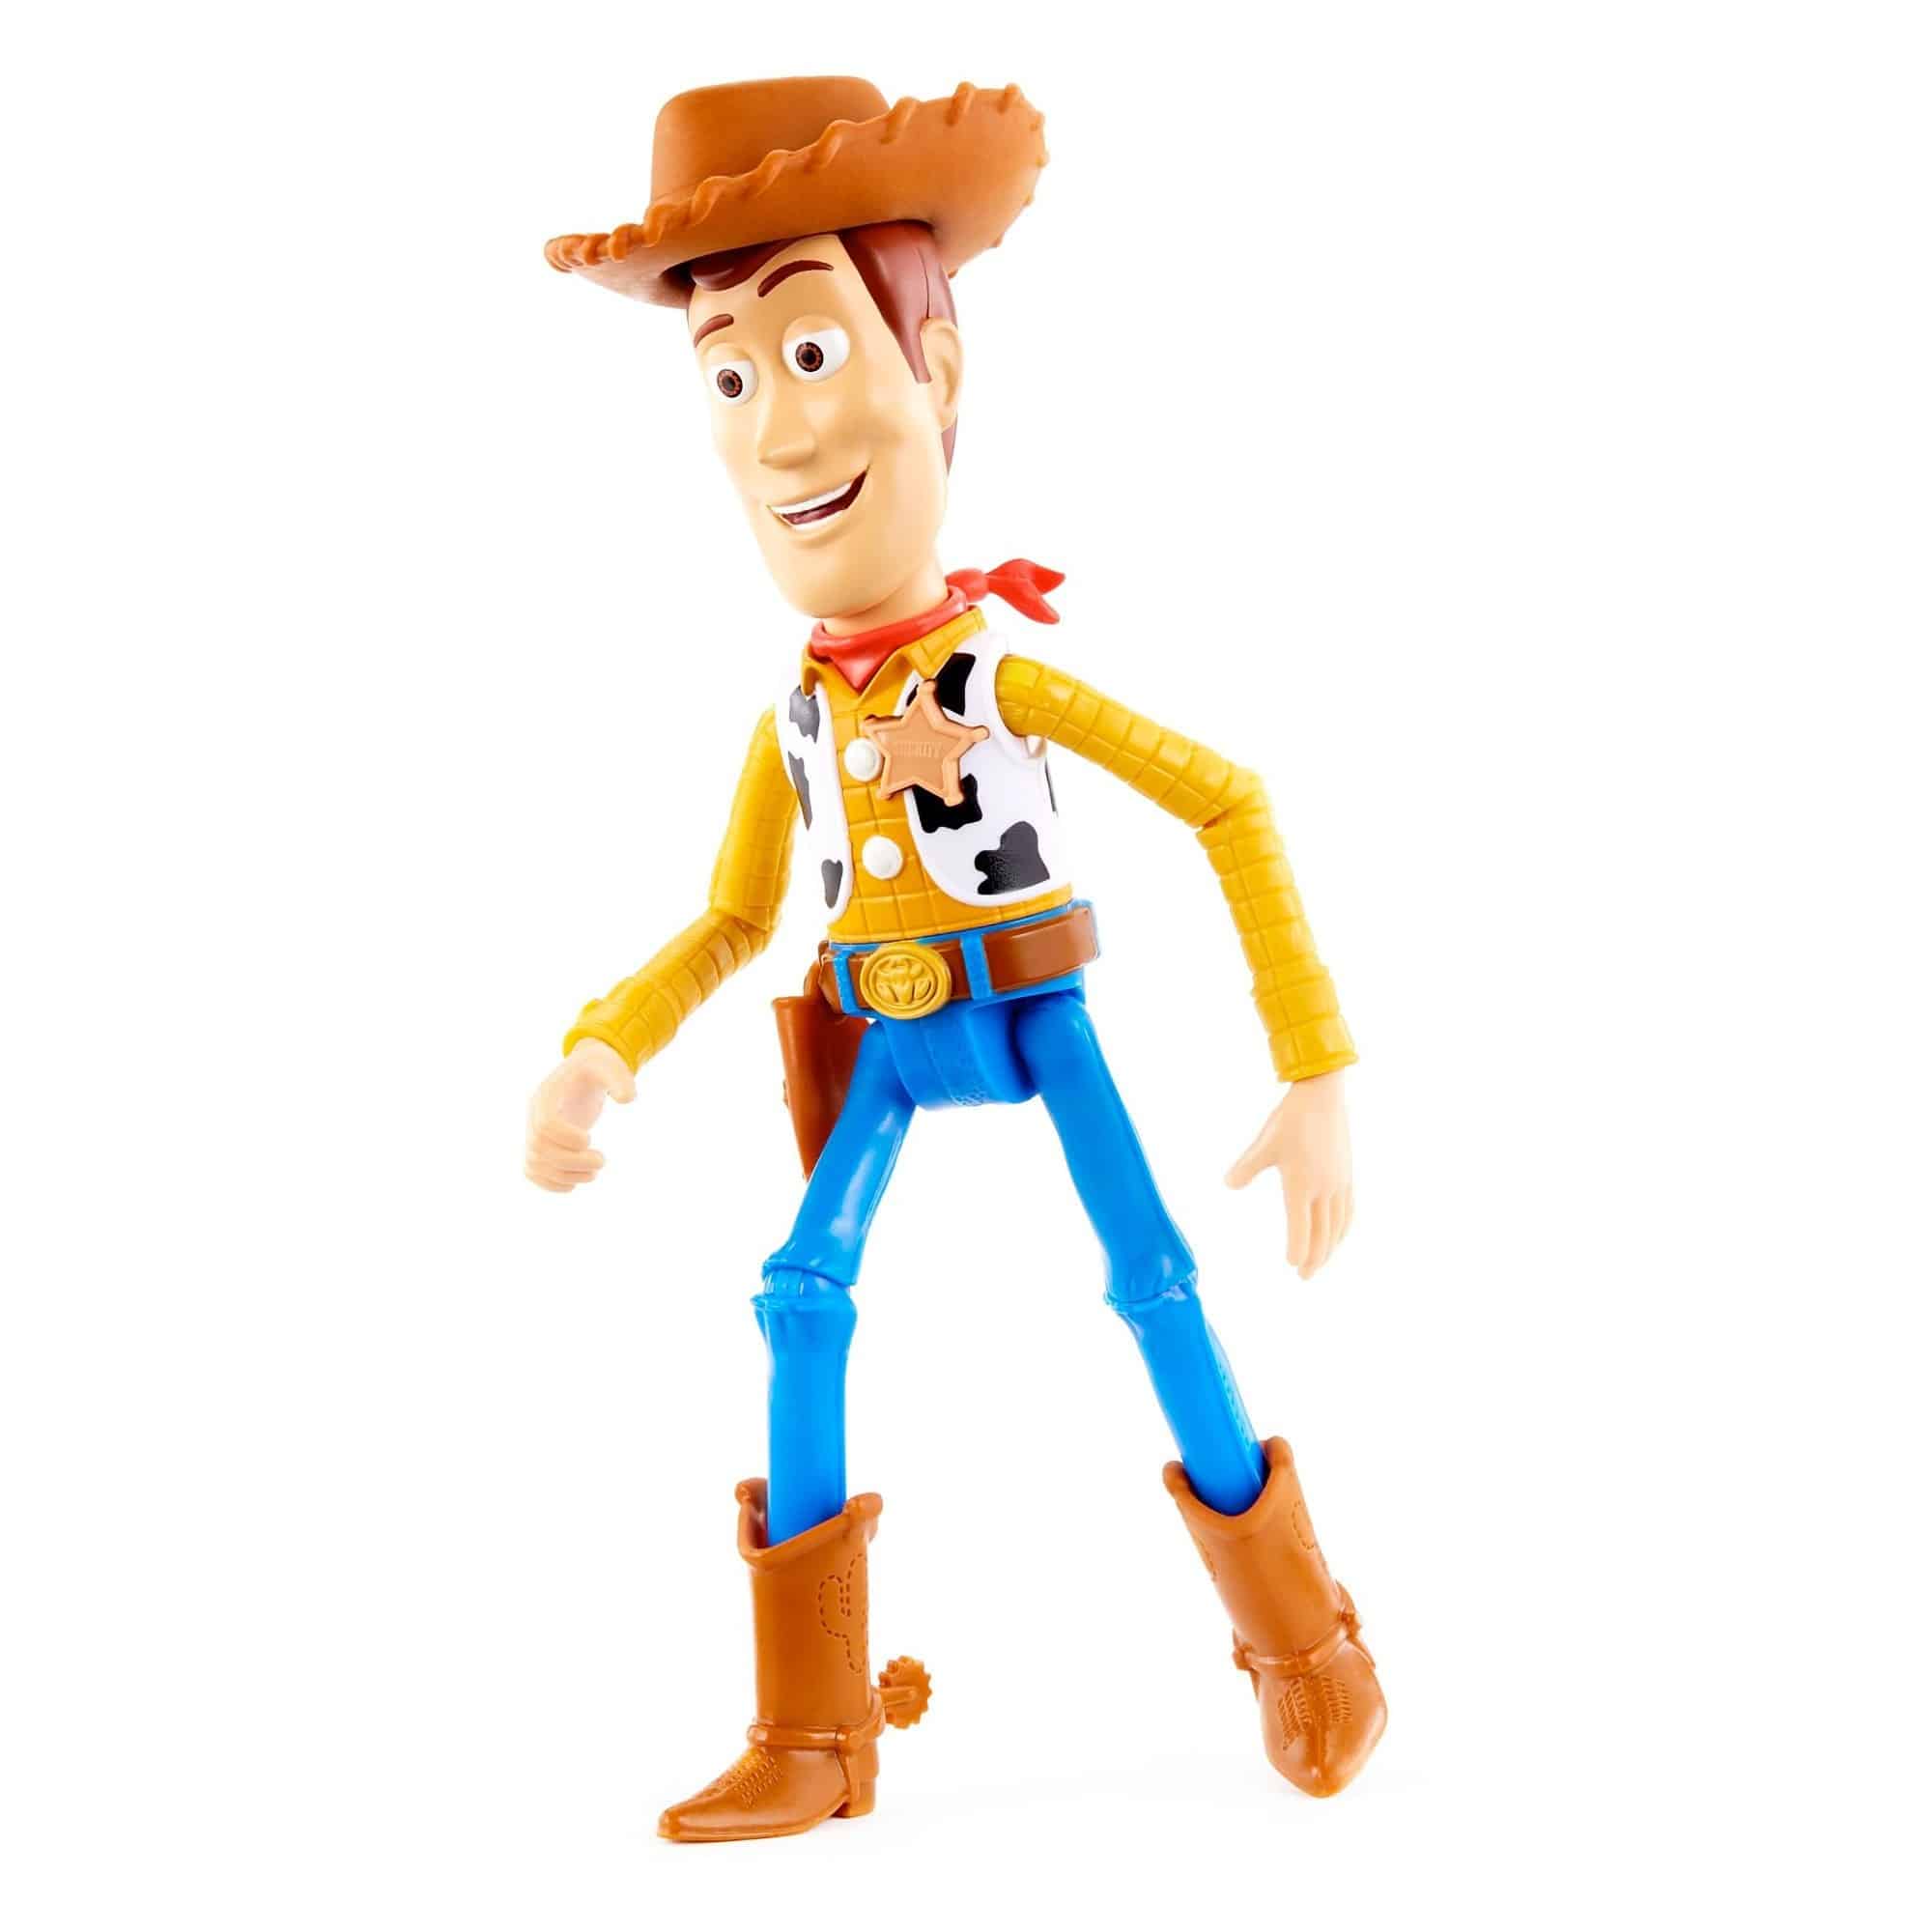 Toy Story 4 - True Talkers - Woody